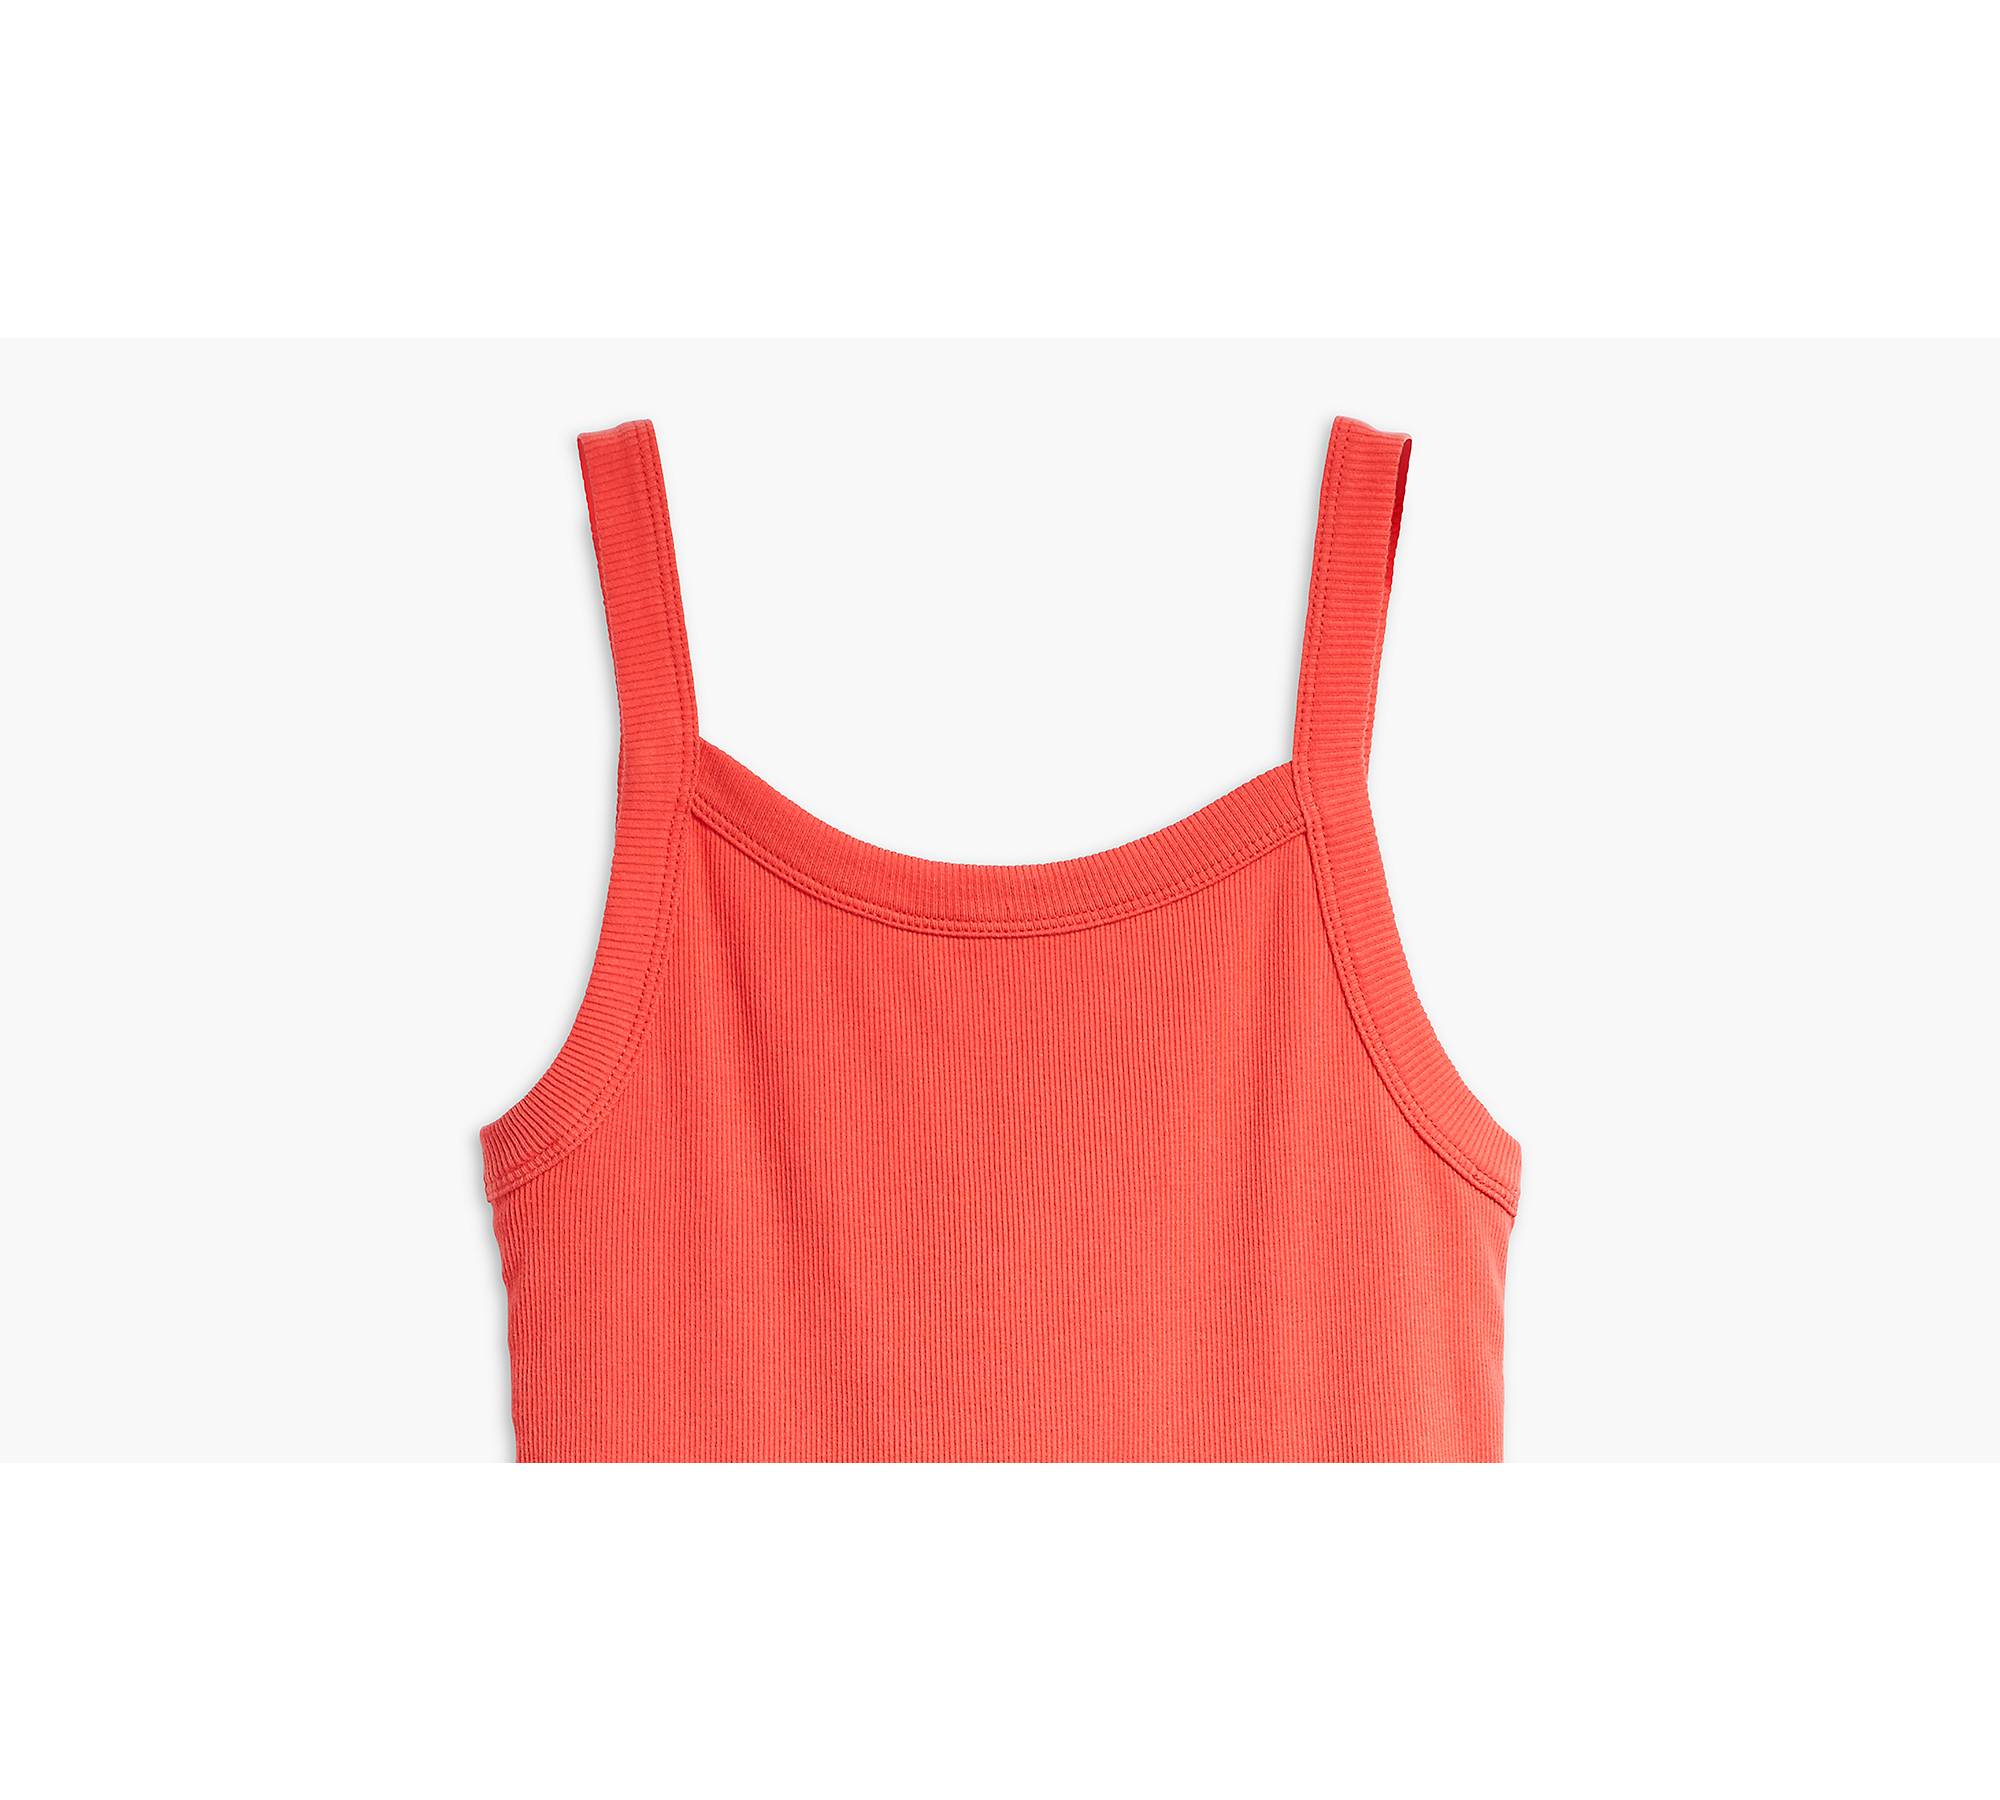 Women's Lightweight Flo Sleeveless Tank Top in Red